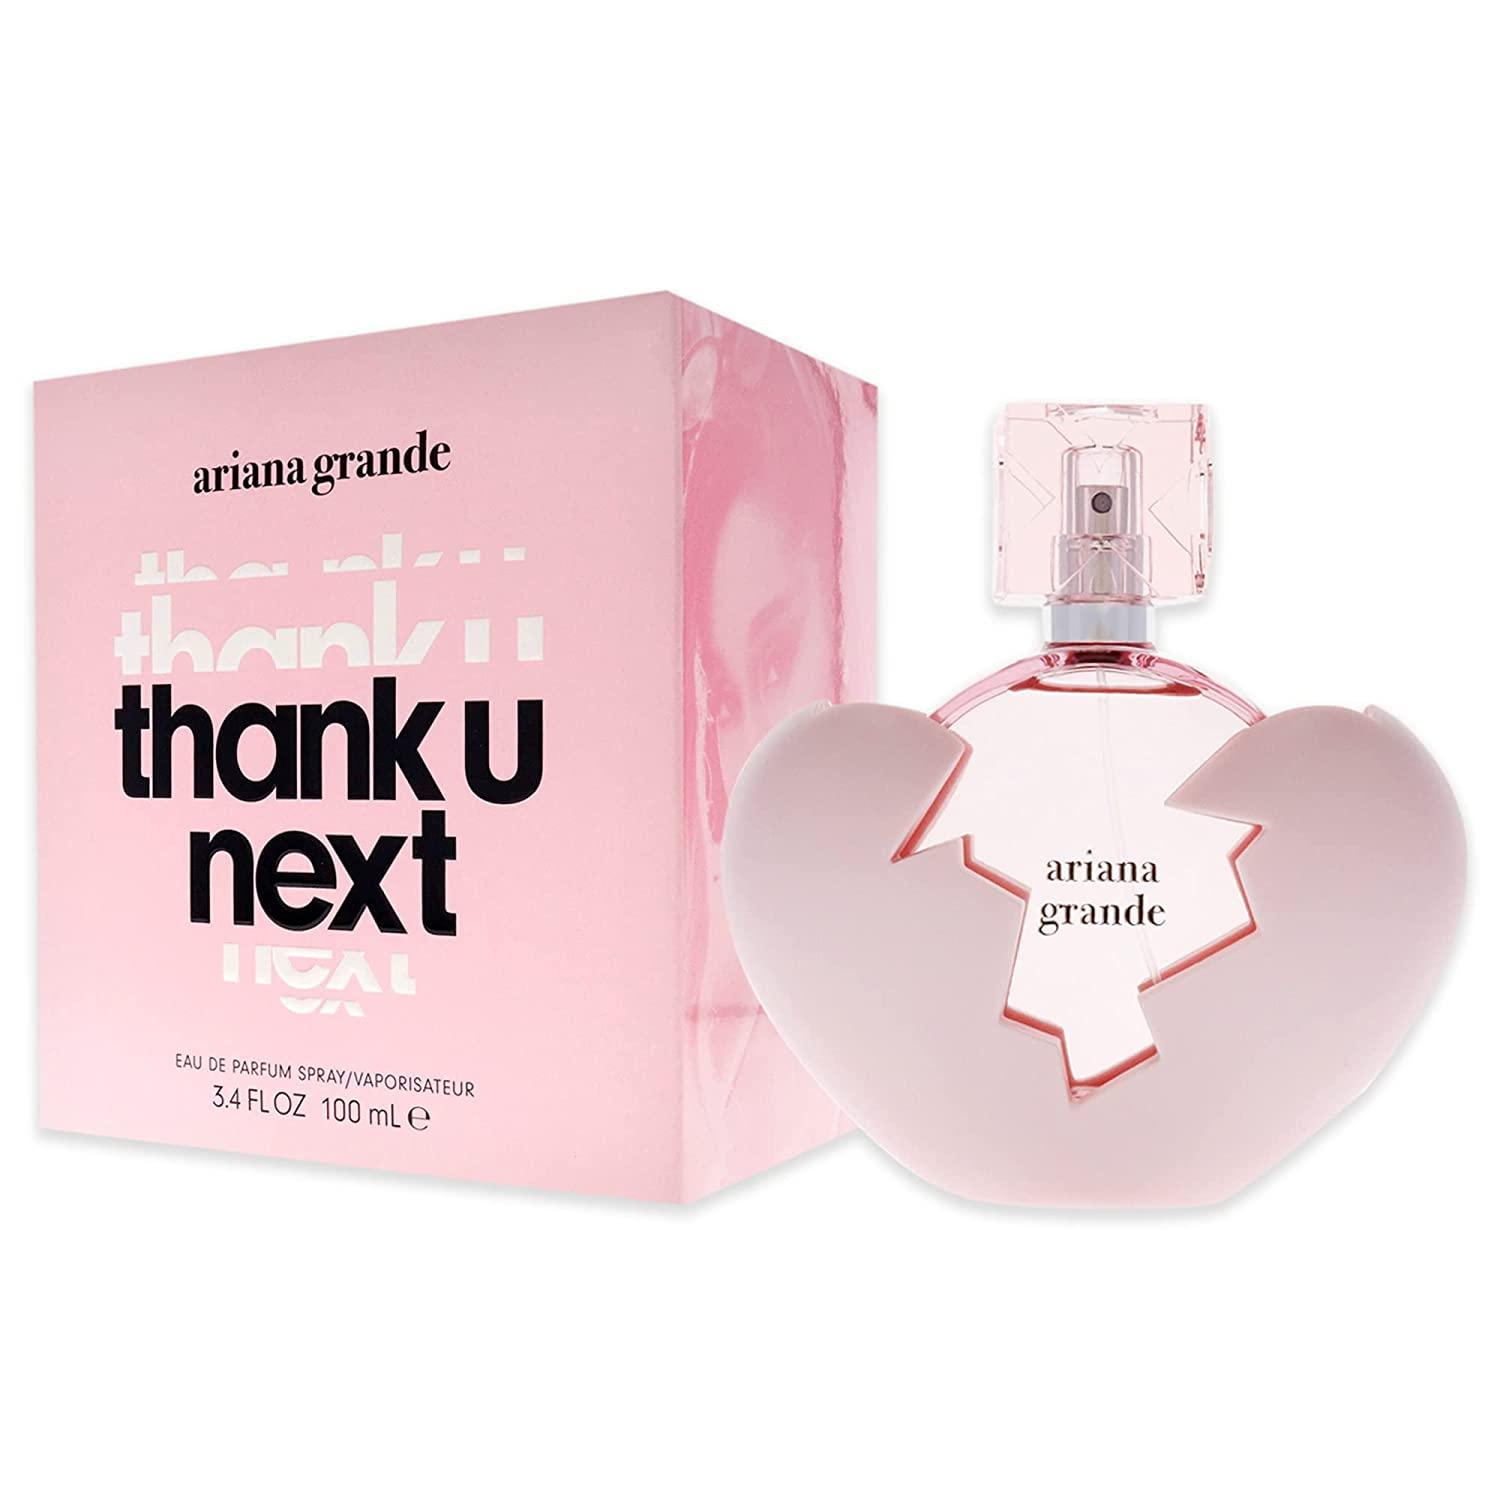  Ariana Grande Thank U Next Eau de Parfum, Floral Gourmand Musk  Fragrance, Notes of Coconut, Macaroon Sugar, Wild Raspberry, Women's  Perfume : Beauty & Personal Care